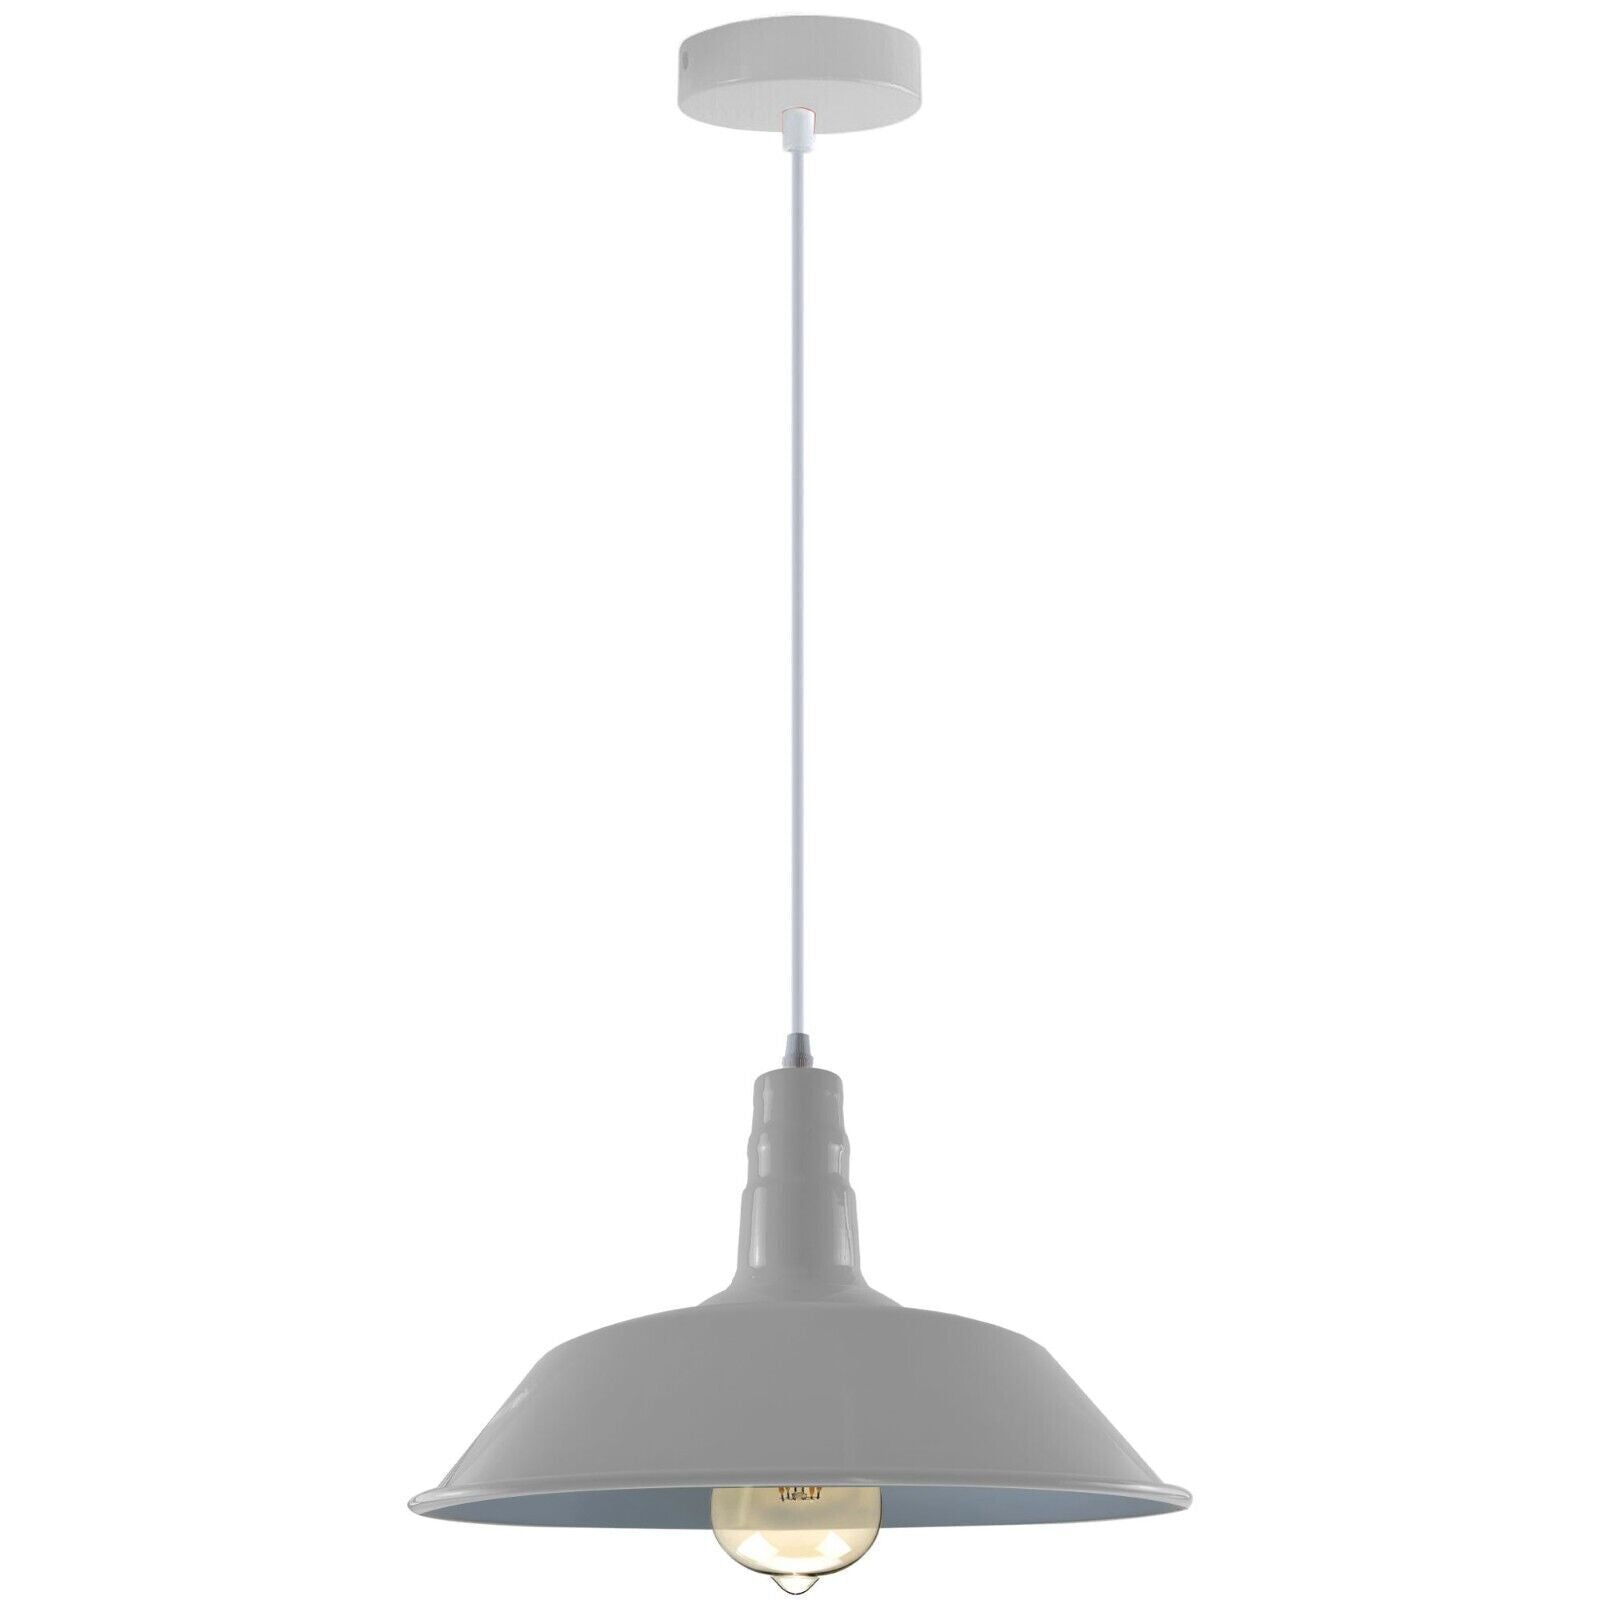 Gray colour Ceiling pendant Light with bulb